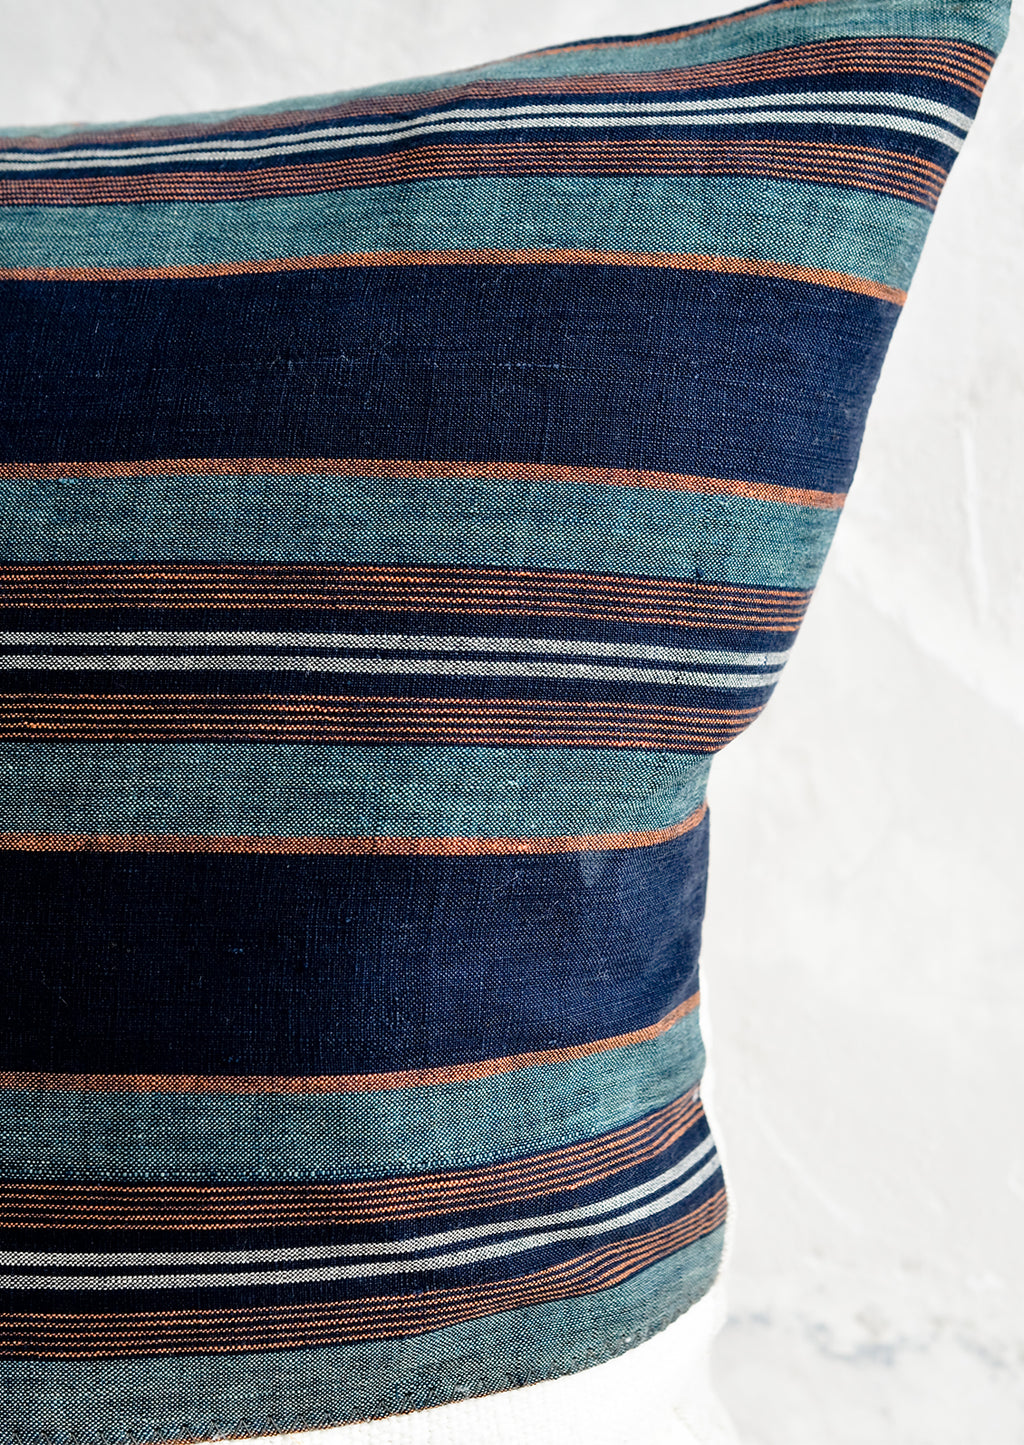 3: Striped japanese hemp fabric in indigo, teal, orange and white.